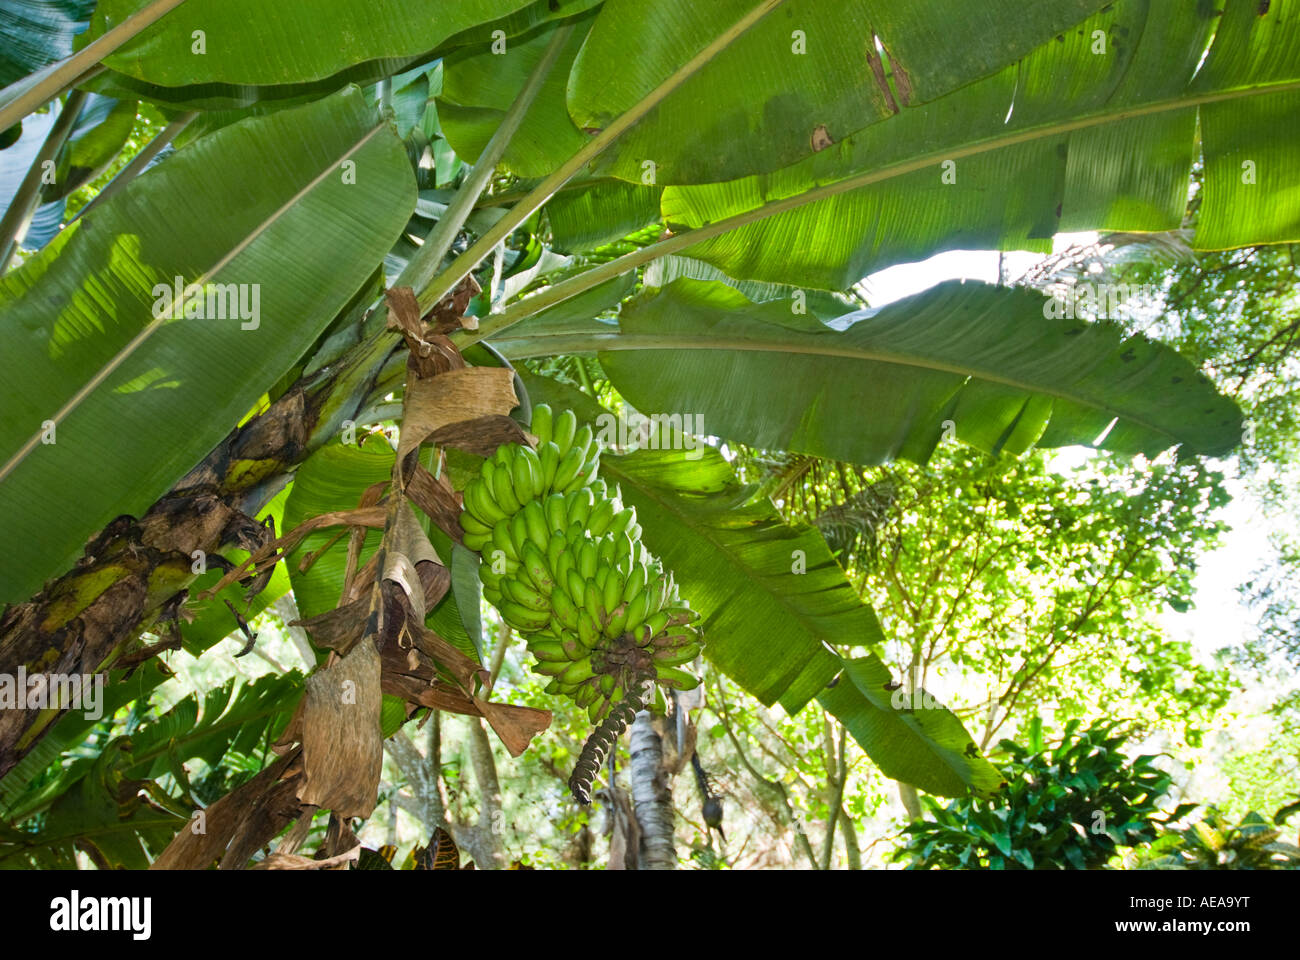 under the banana plant fresh plant fiji Islands and leaves Stock Photo